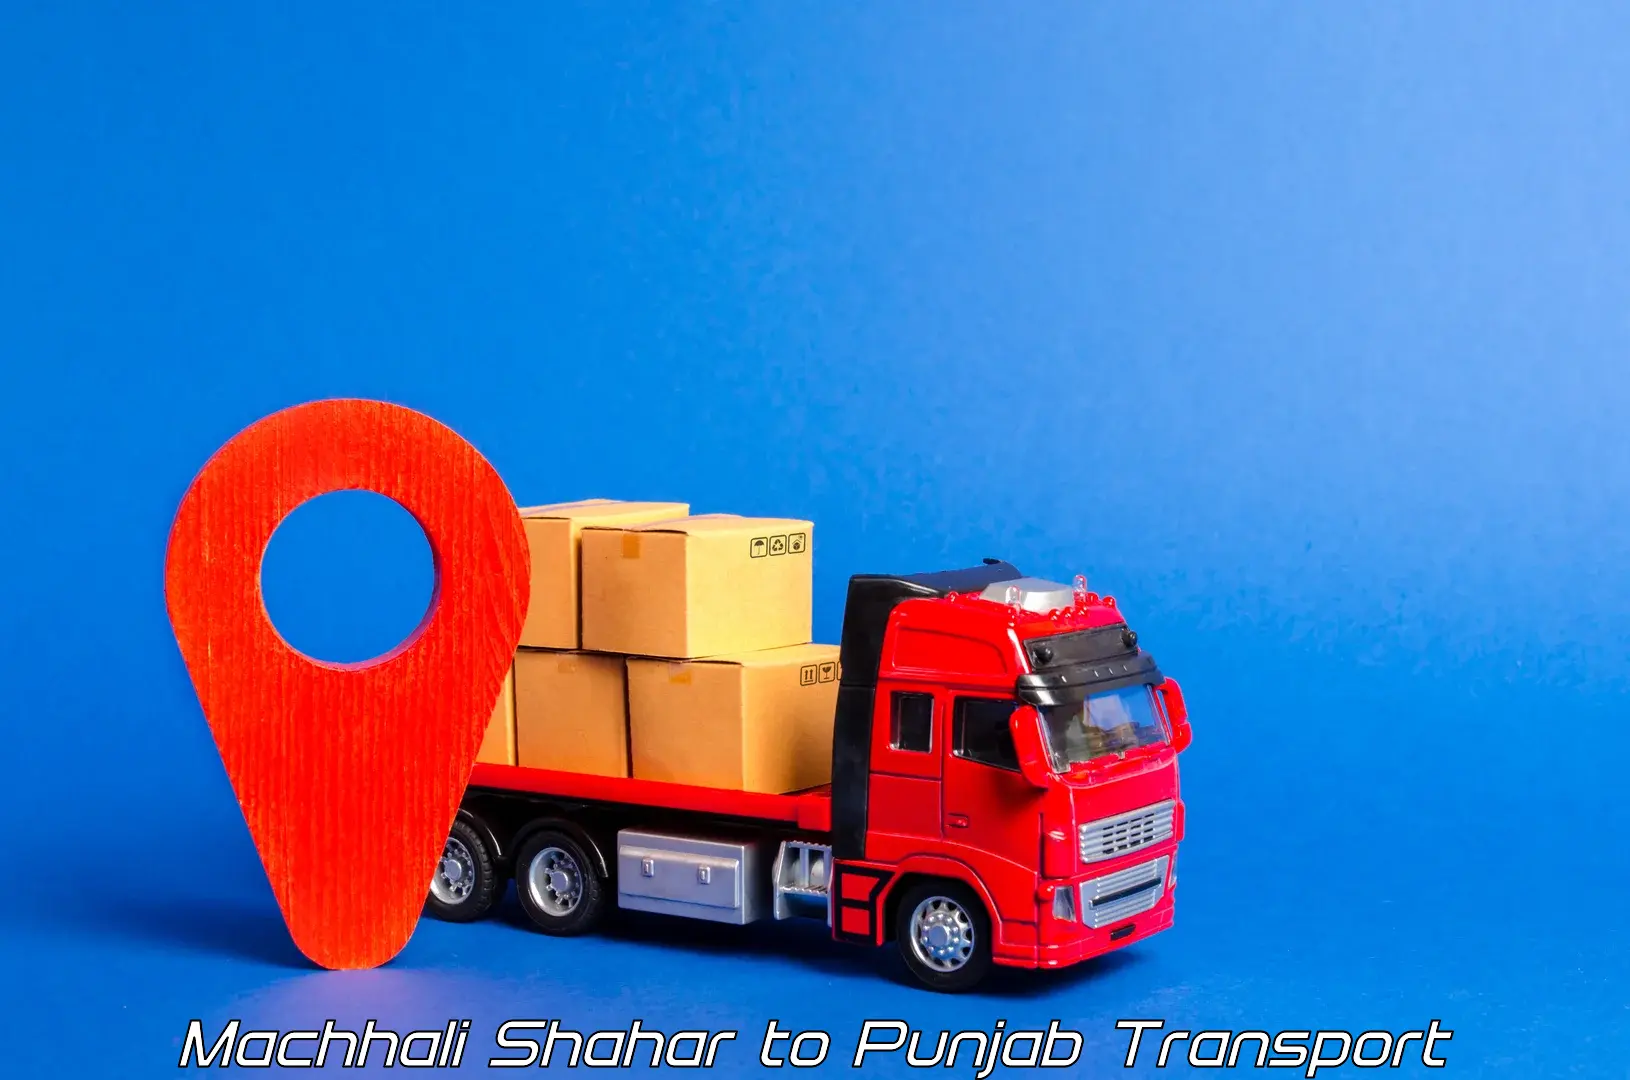 Truck transport companies in India Machhali Shahar to Punjab